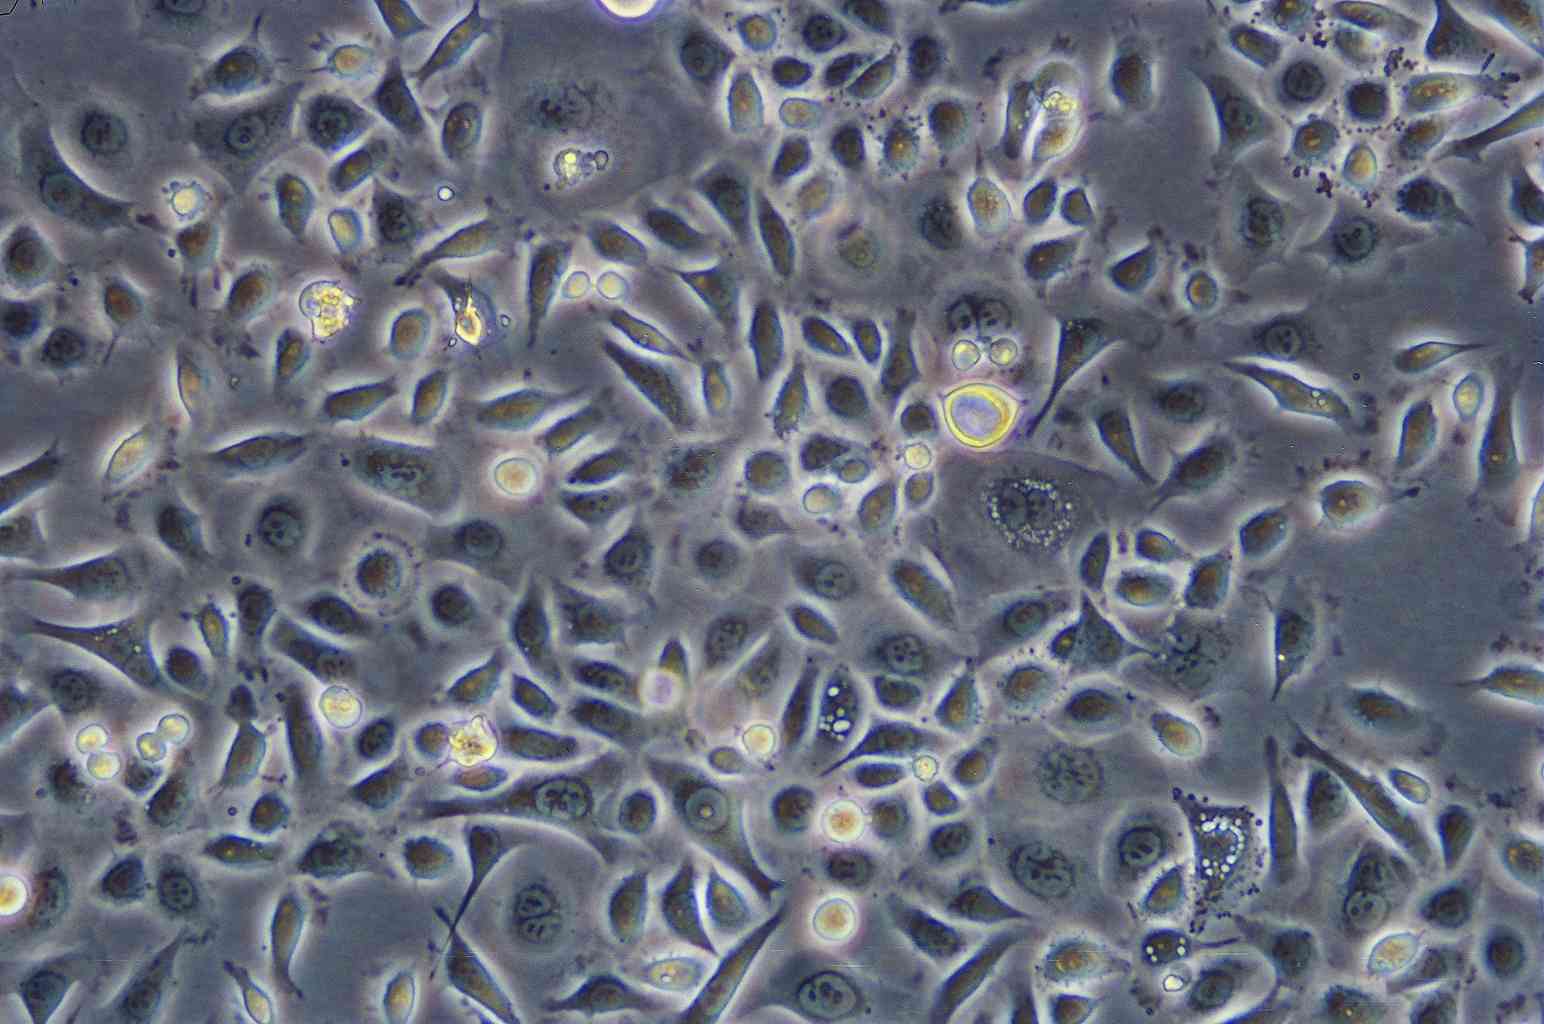 SaOS-2 Cells|人成骨肉瘤克隆细胞(包送STR鉴定报告)